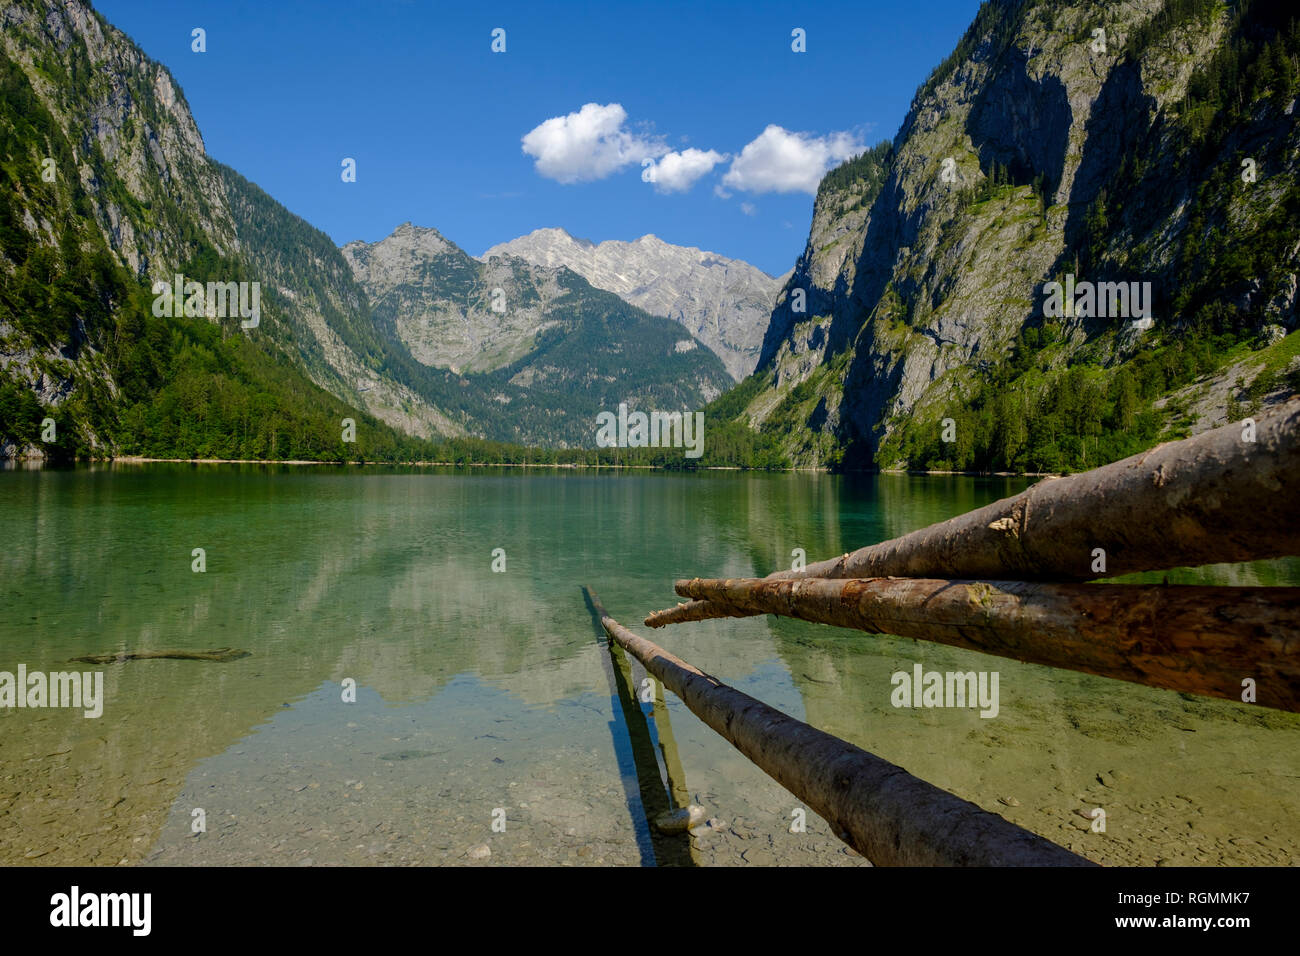 In Germania, in Baviera, Baviera, sulle Alpi di Berchtesgaden, Parco Nazionale di Berchtesgaden, Salet, Fischunkelalm al lago Obersee Foto Stock